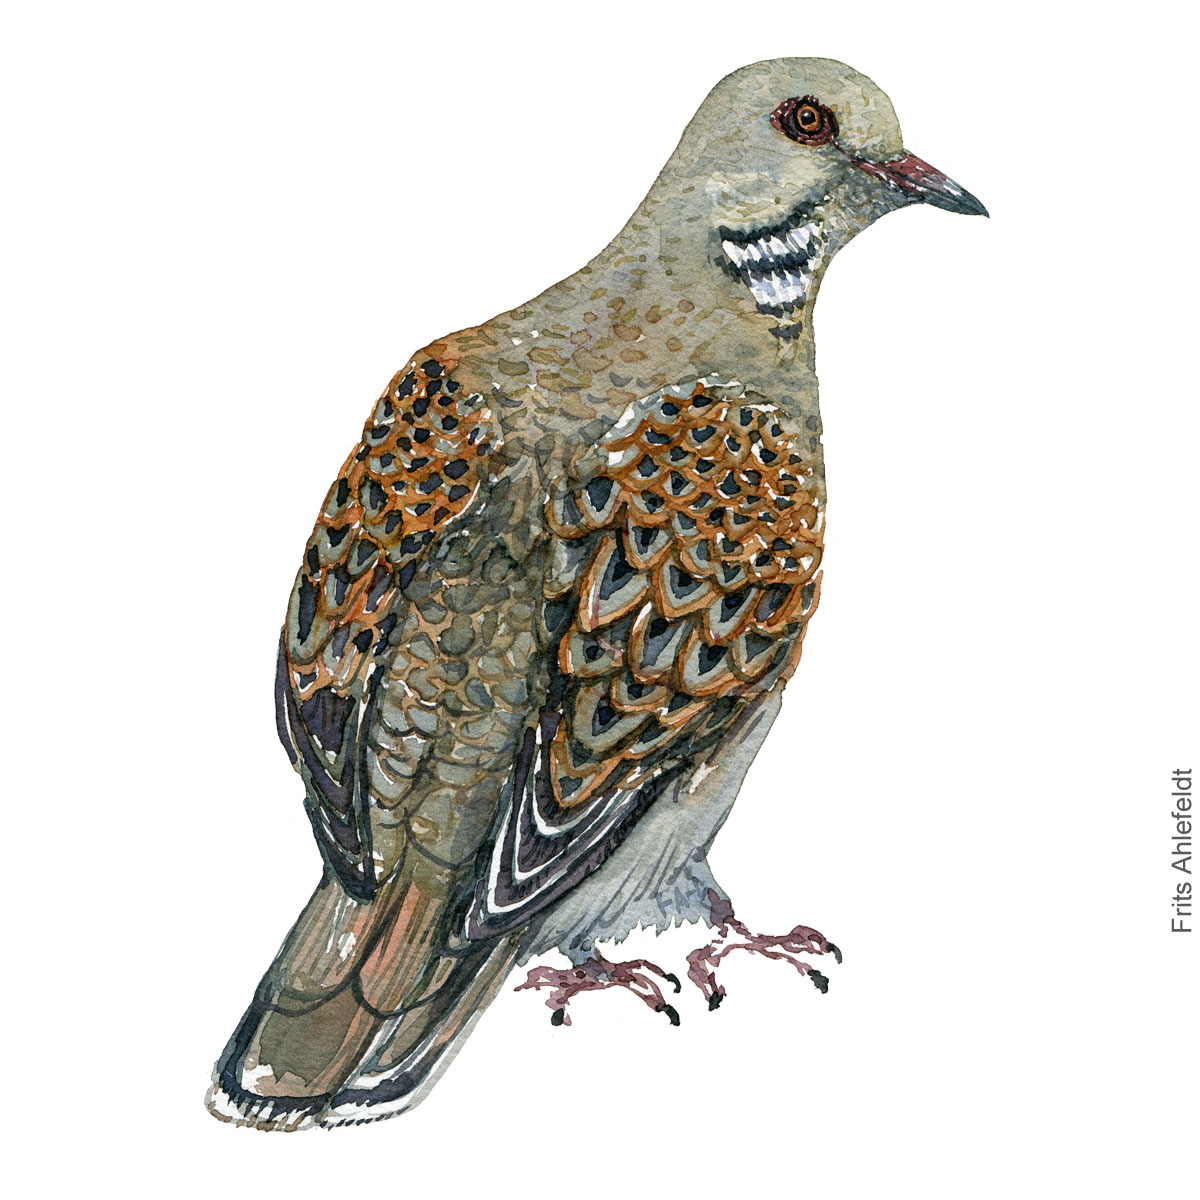 Turteldue - European turtledove - Bird watercolor painting. Artwork by Frits Ahlefeldt. Fugle akvarel